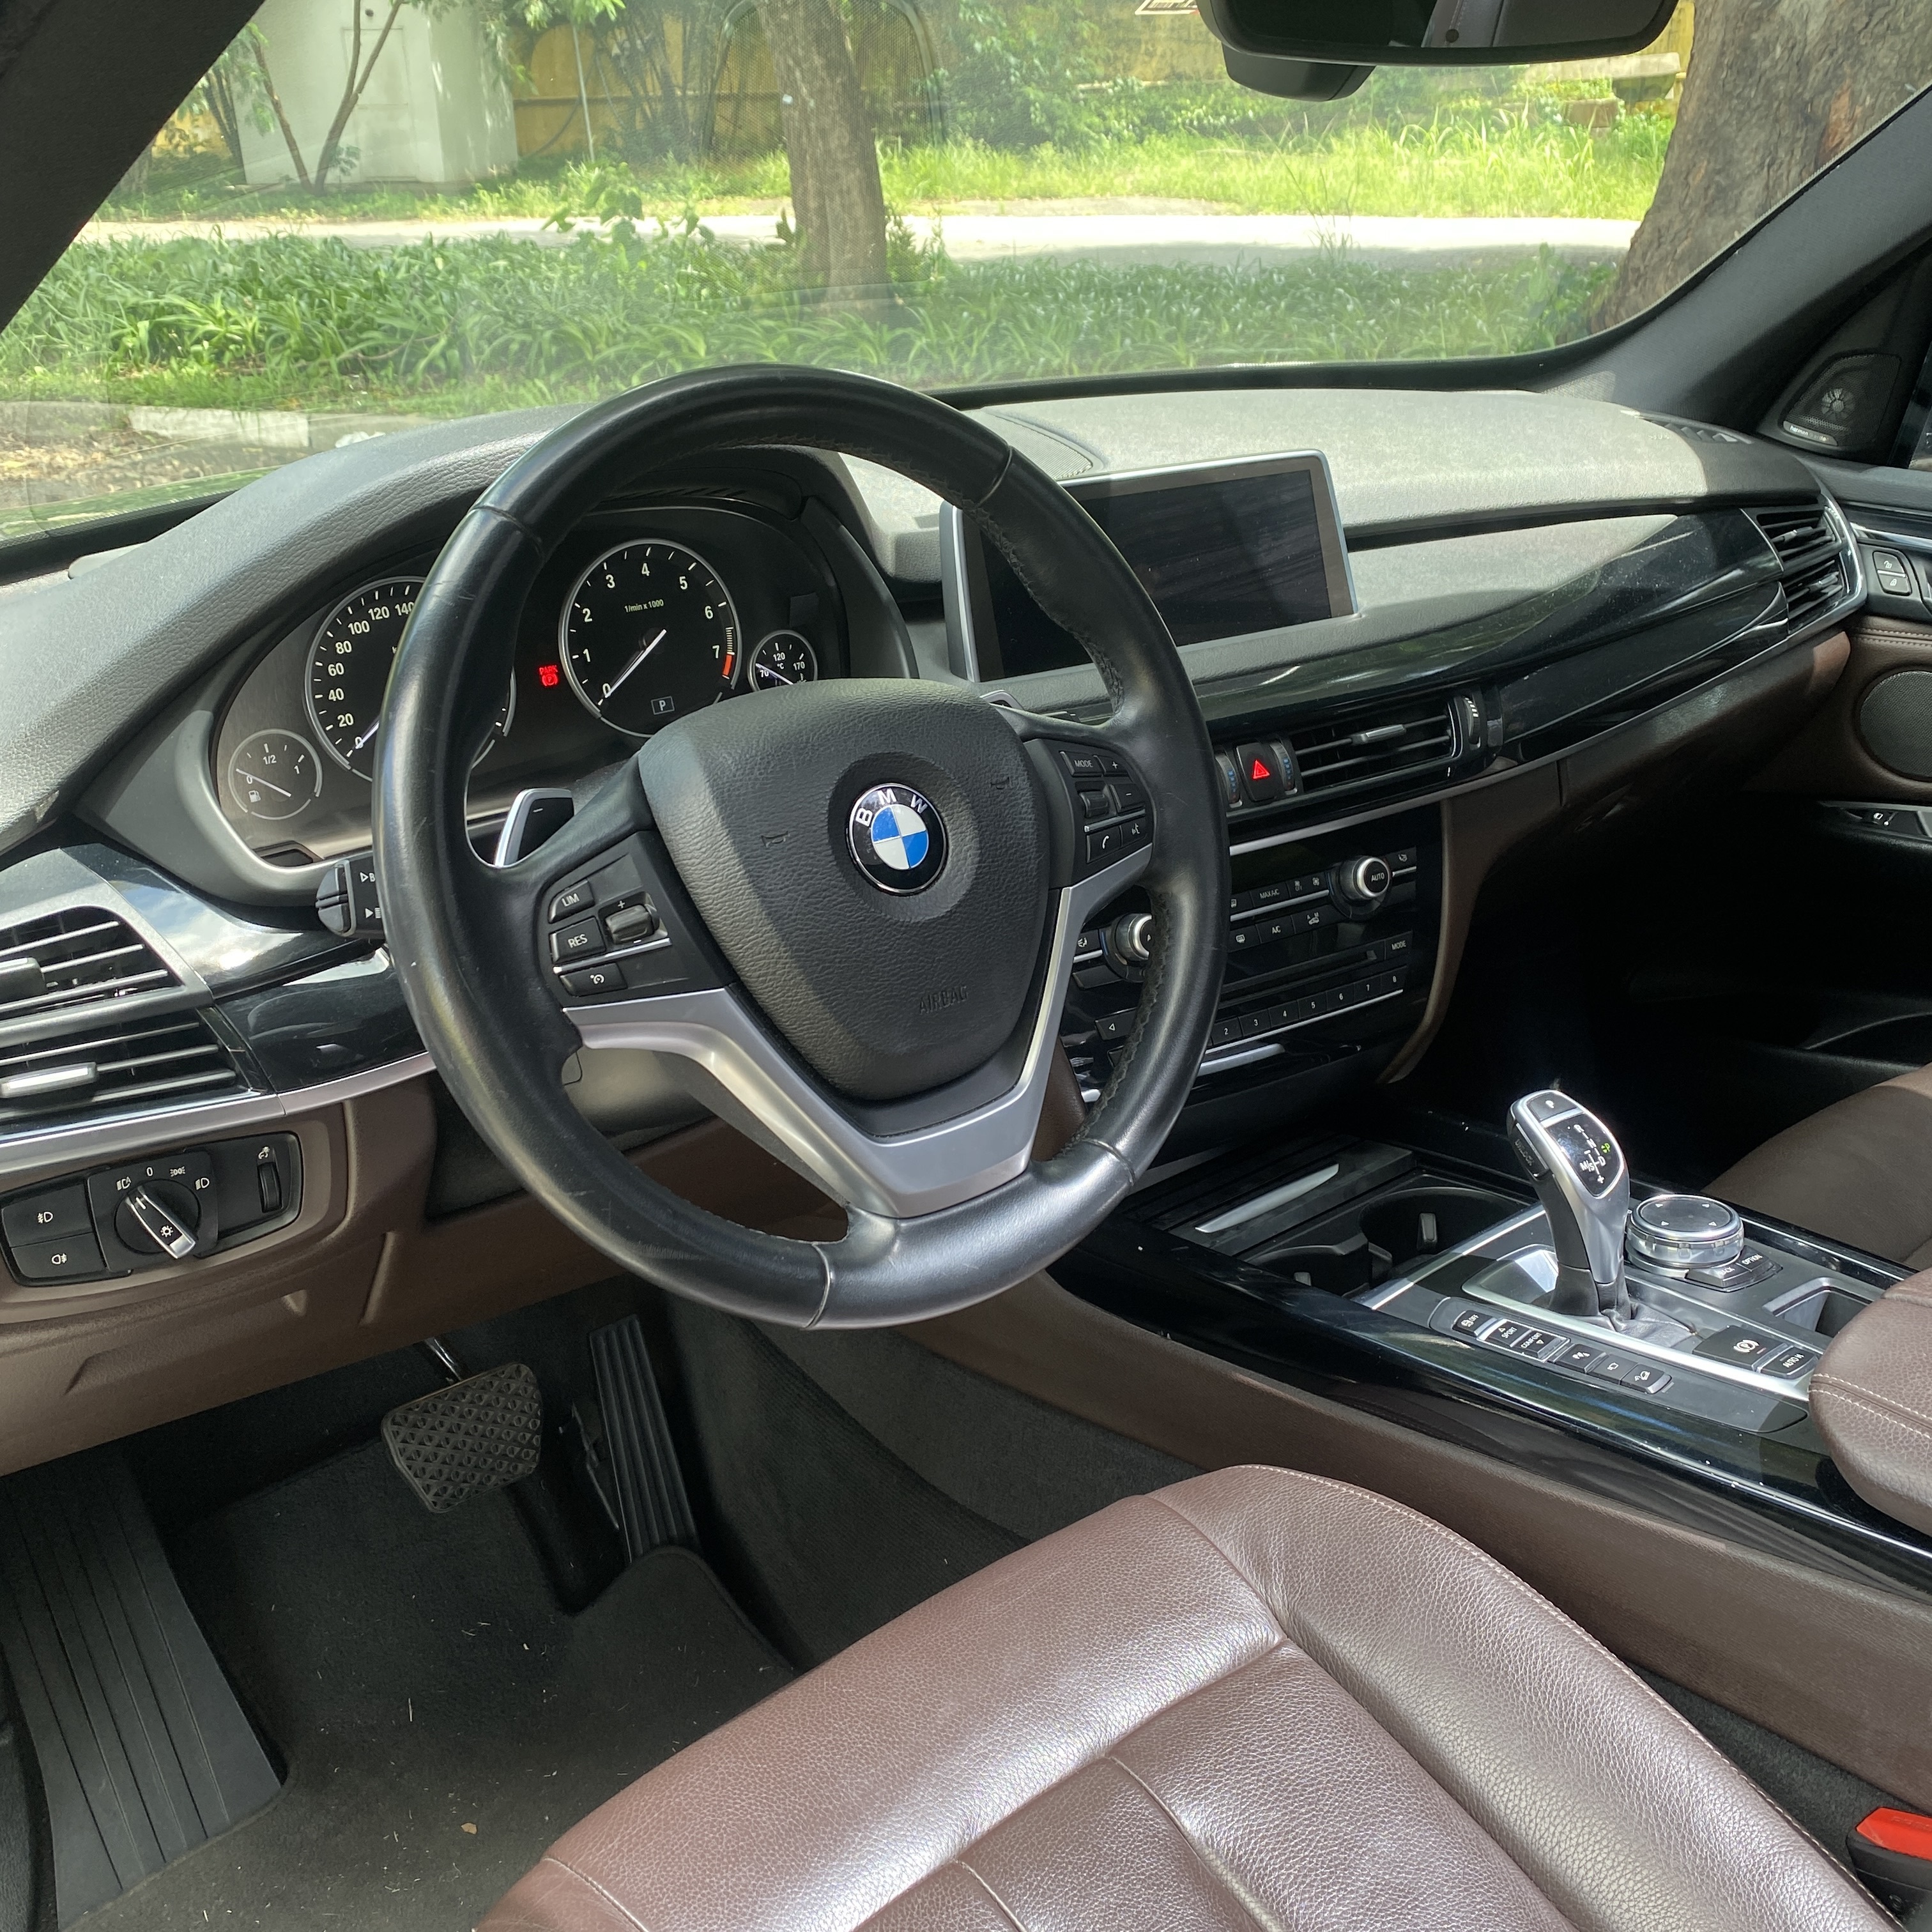 BMW X5 3.0 I6 TURBO XDRIVE 35I  GASOLINA